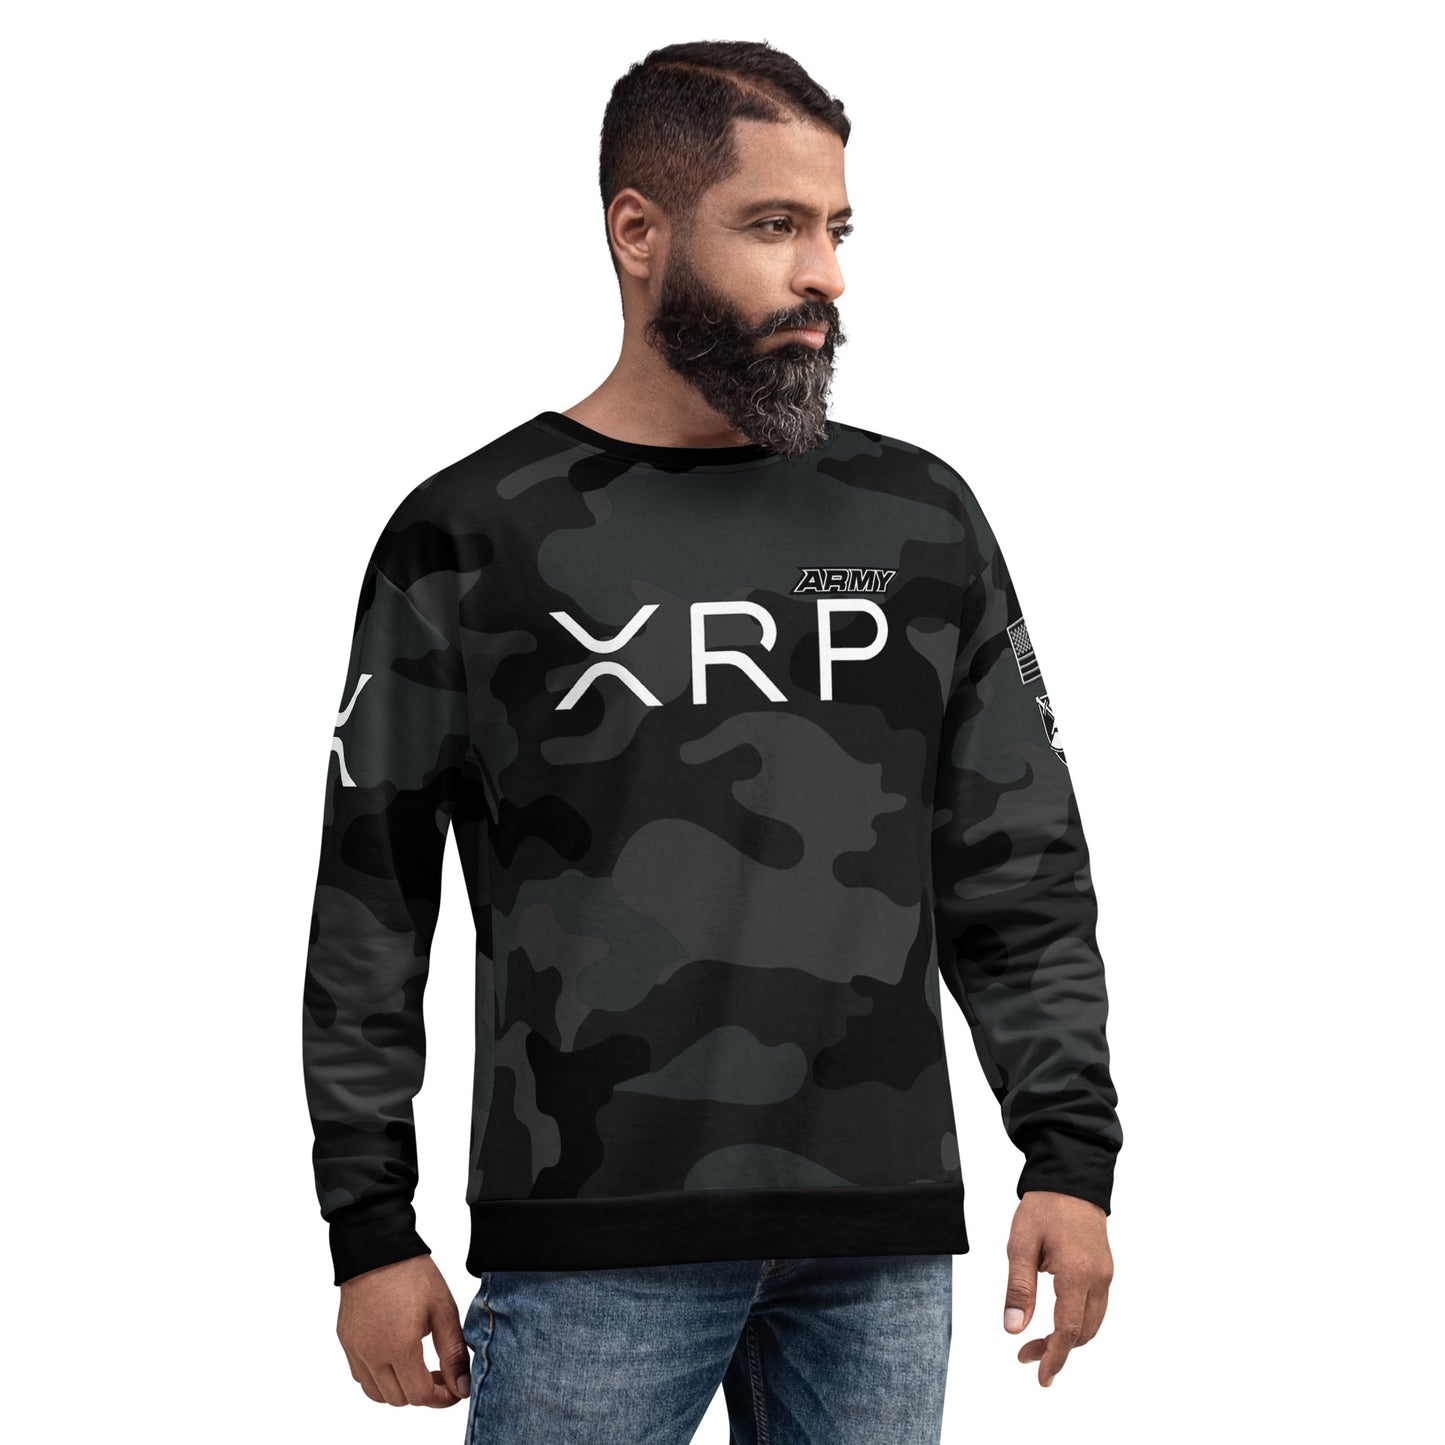 Xrp Army Knights Sweatshirt